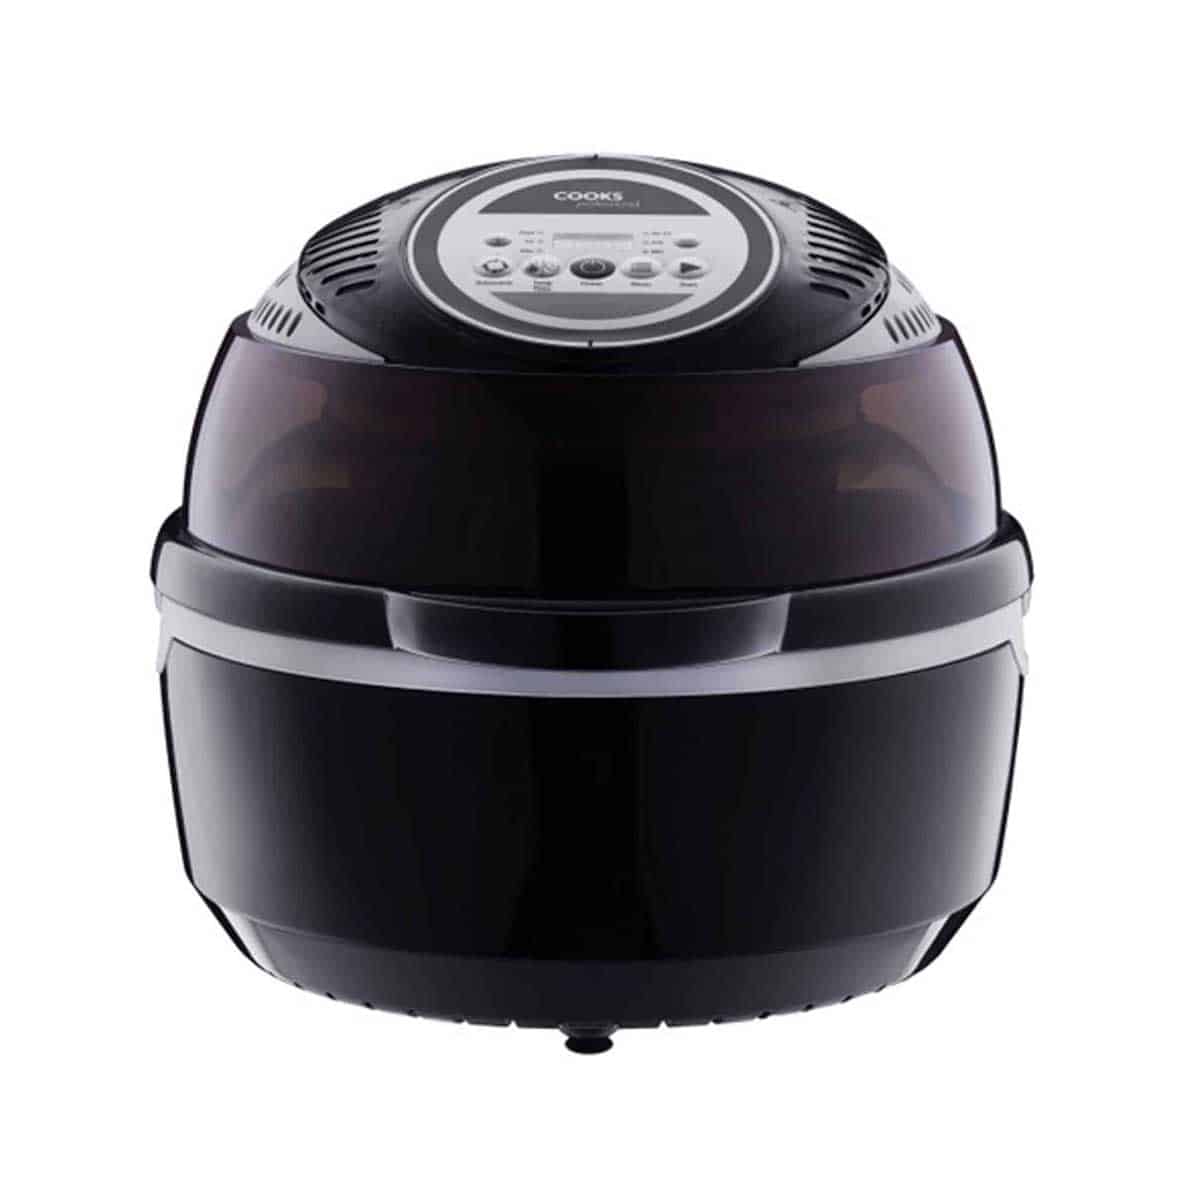 Professional Digital Air Fryer Rotisserie Halogen Oven 17L Healthy Cooking  1400W 5056295305622